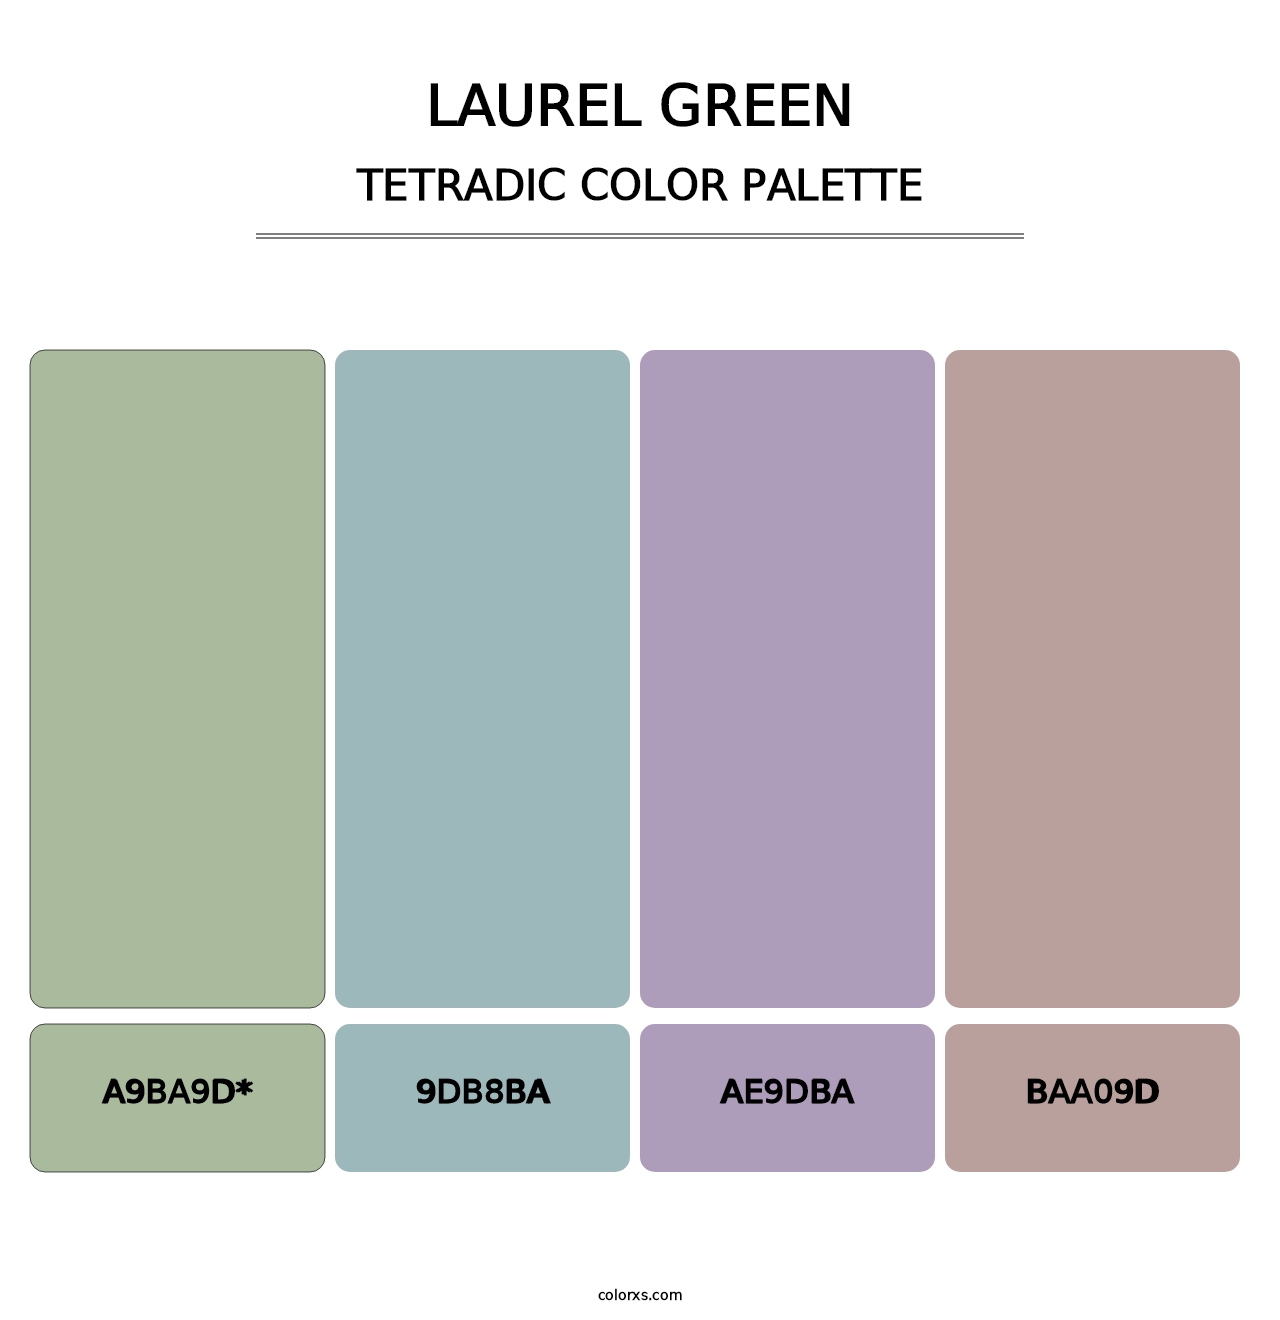 Laurel Green - Tetradic Color Palette